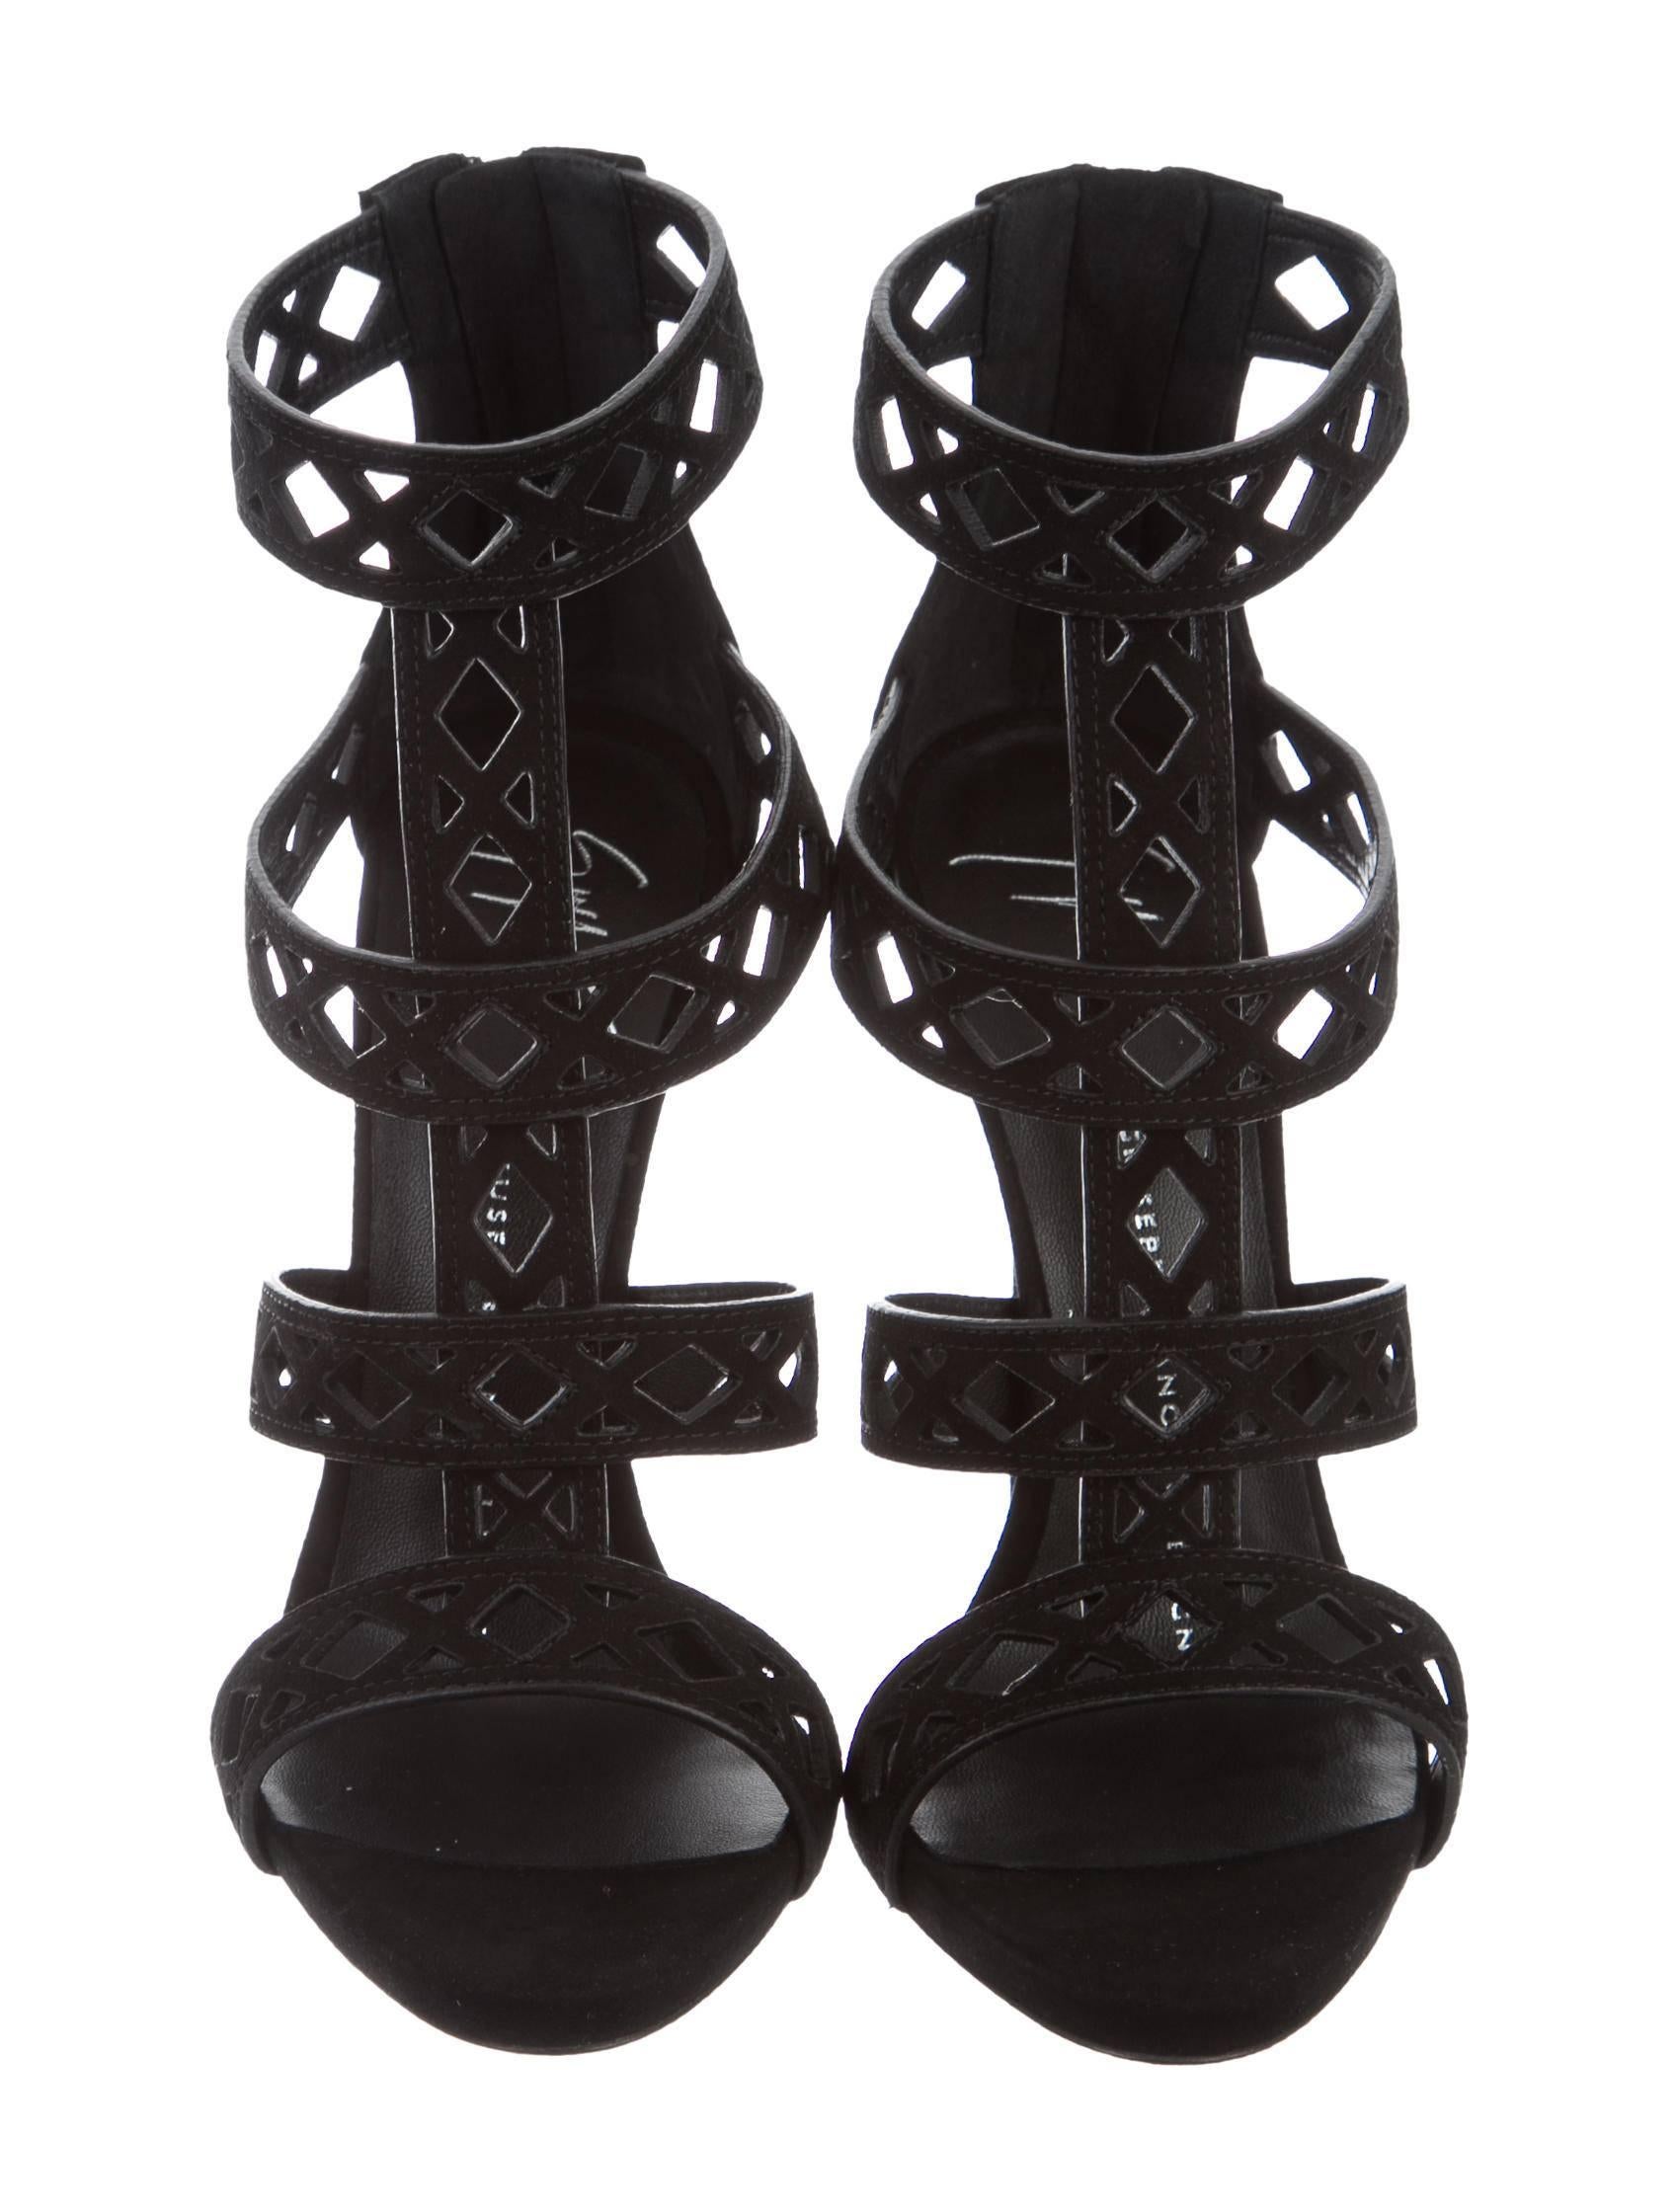 Women's Giuseppe Zanotti NEW Black Cut Out Evening Sandals Heels Shoes in Box